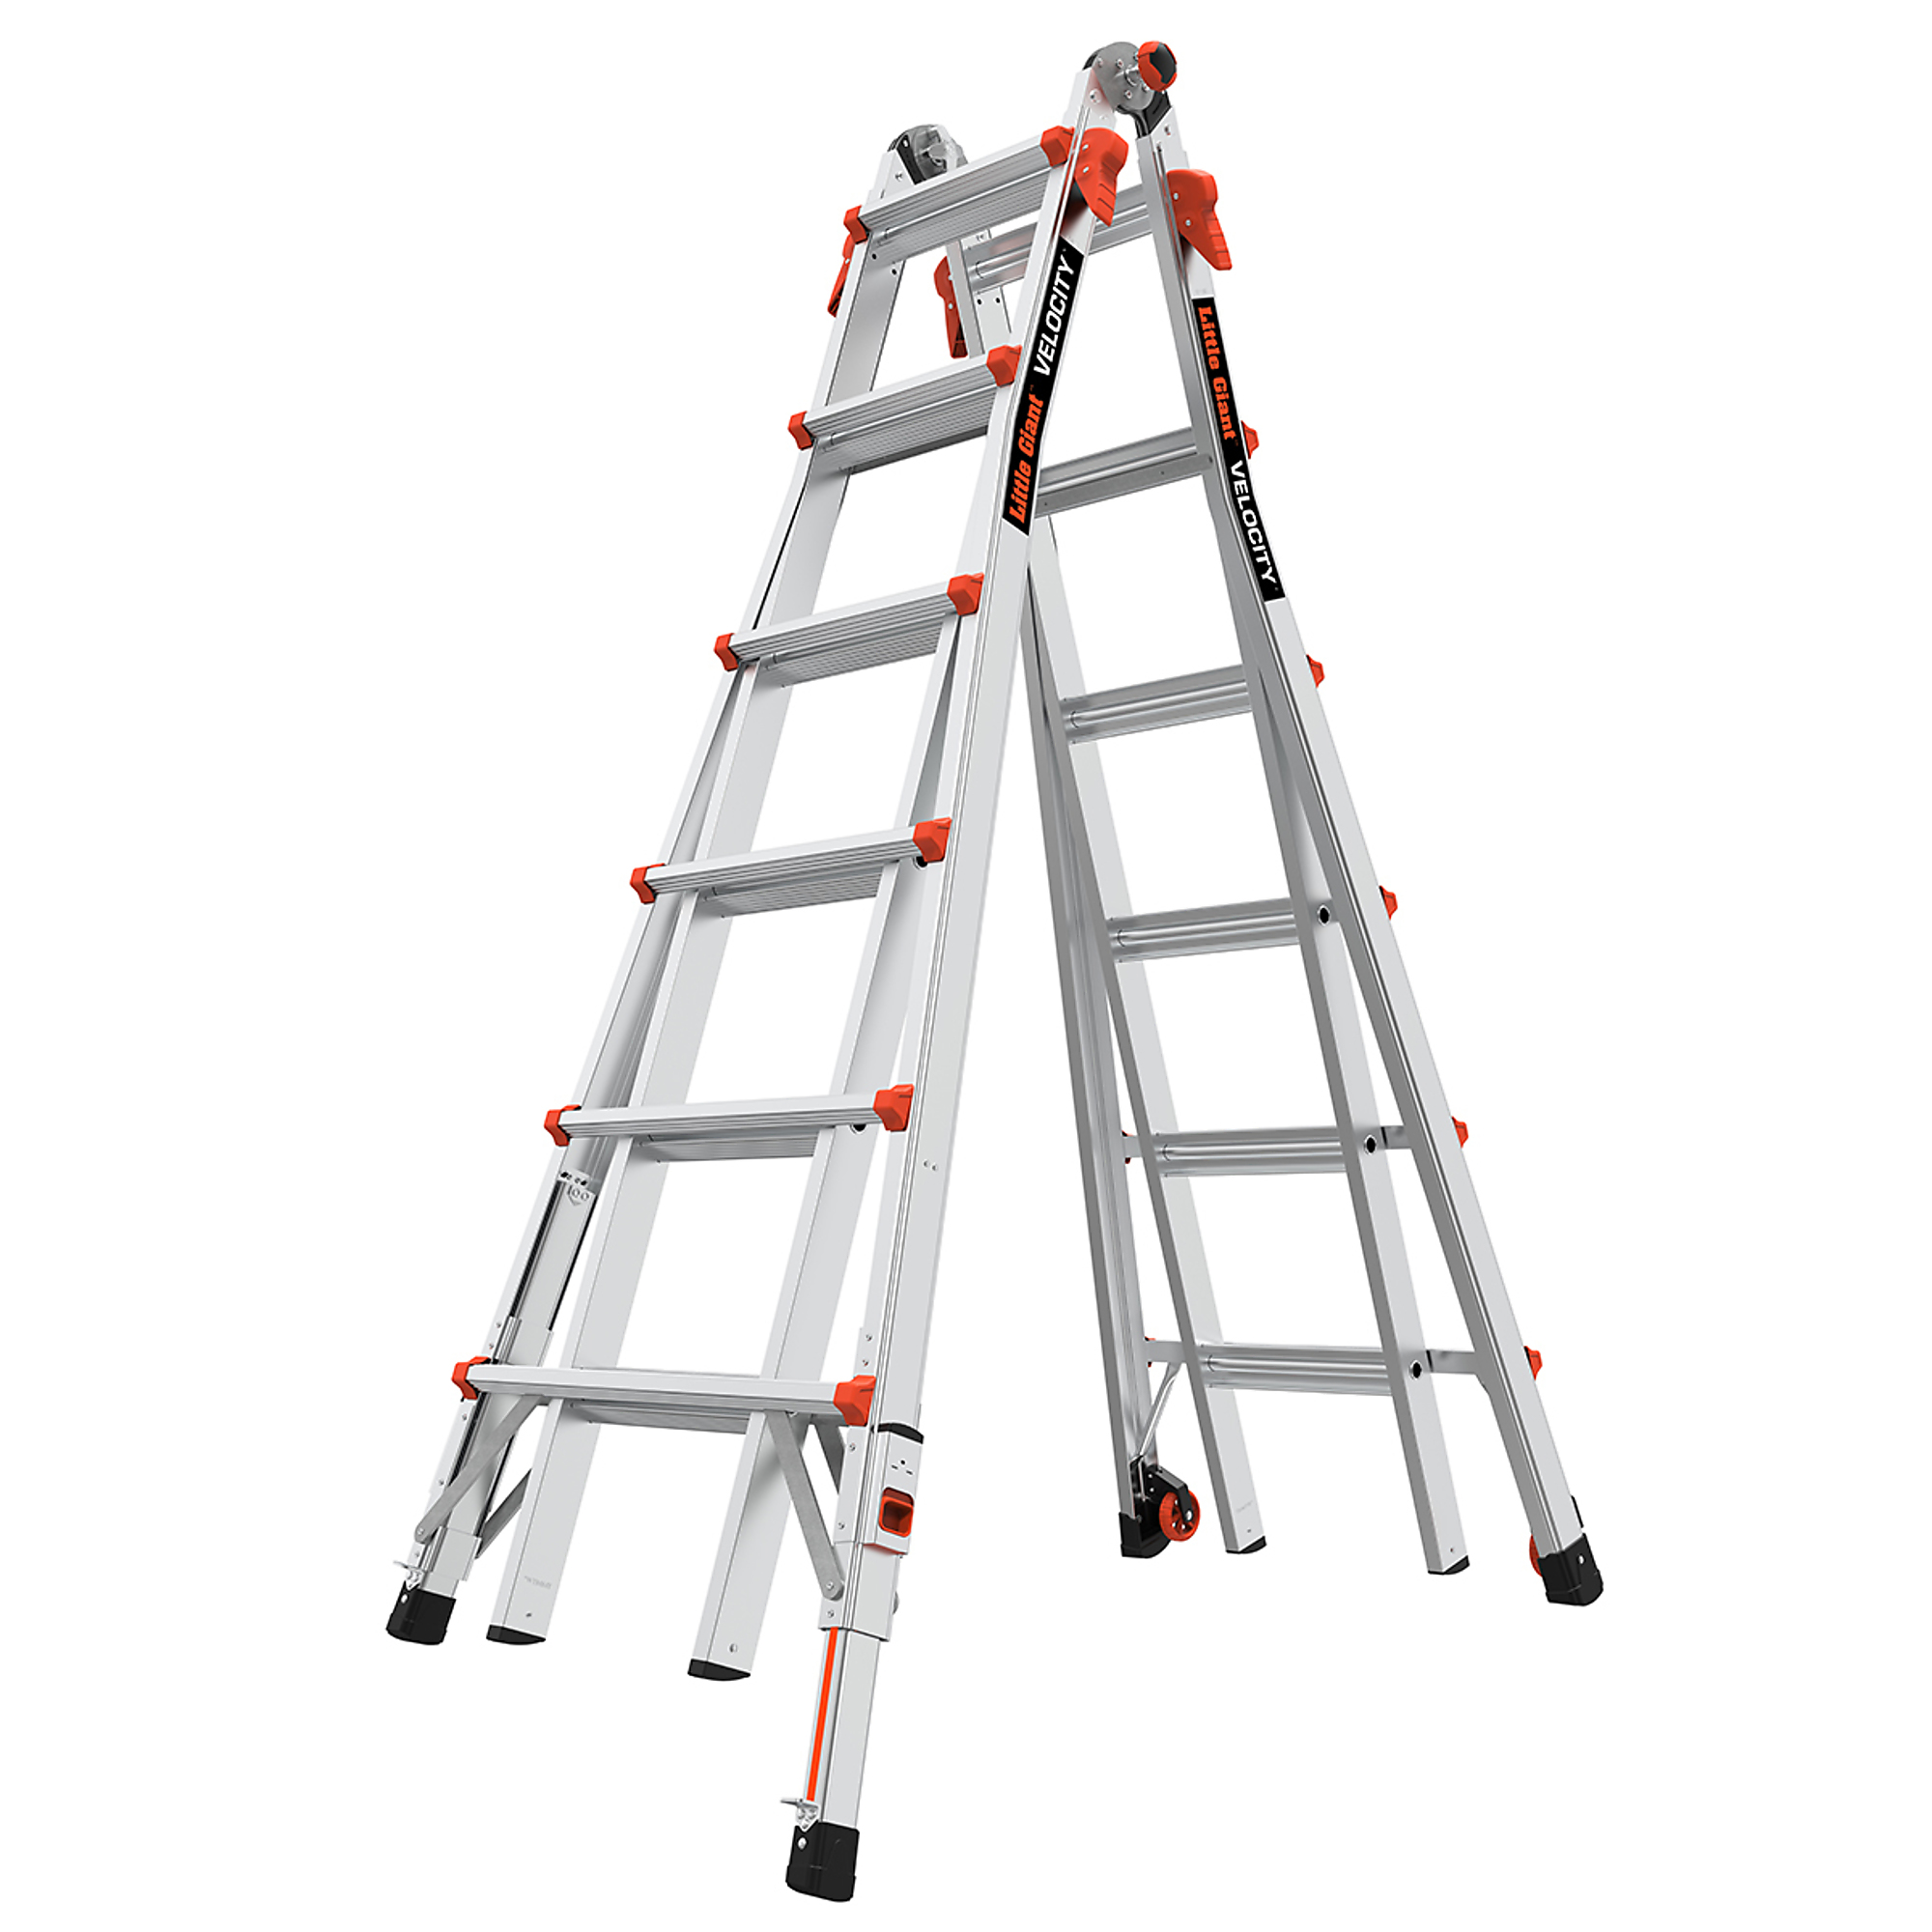 VELOCITY 26 Alum Articulated Ext. Ladder Levelers, Height 26 ft, Capacity 300 lb, Material Aluminum, Model - Little Giant Ladder 15426-801